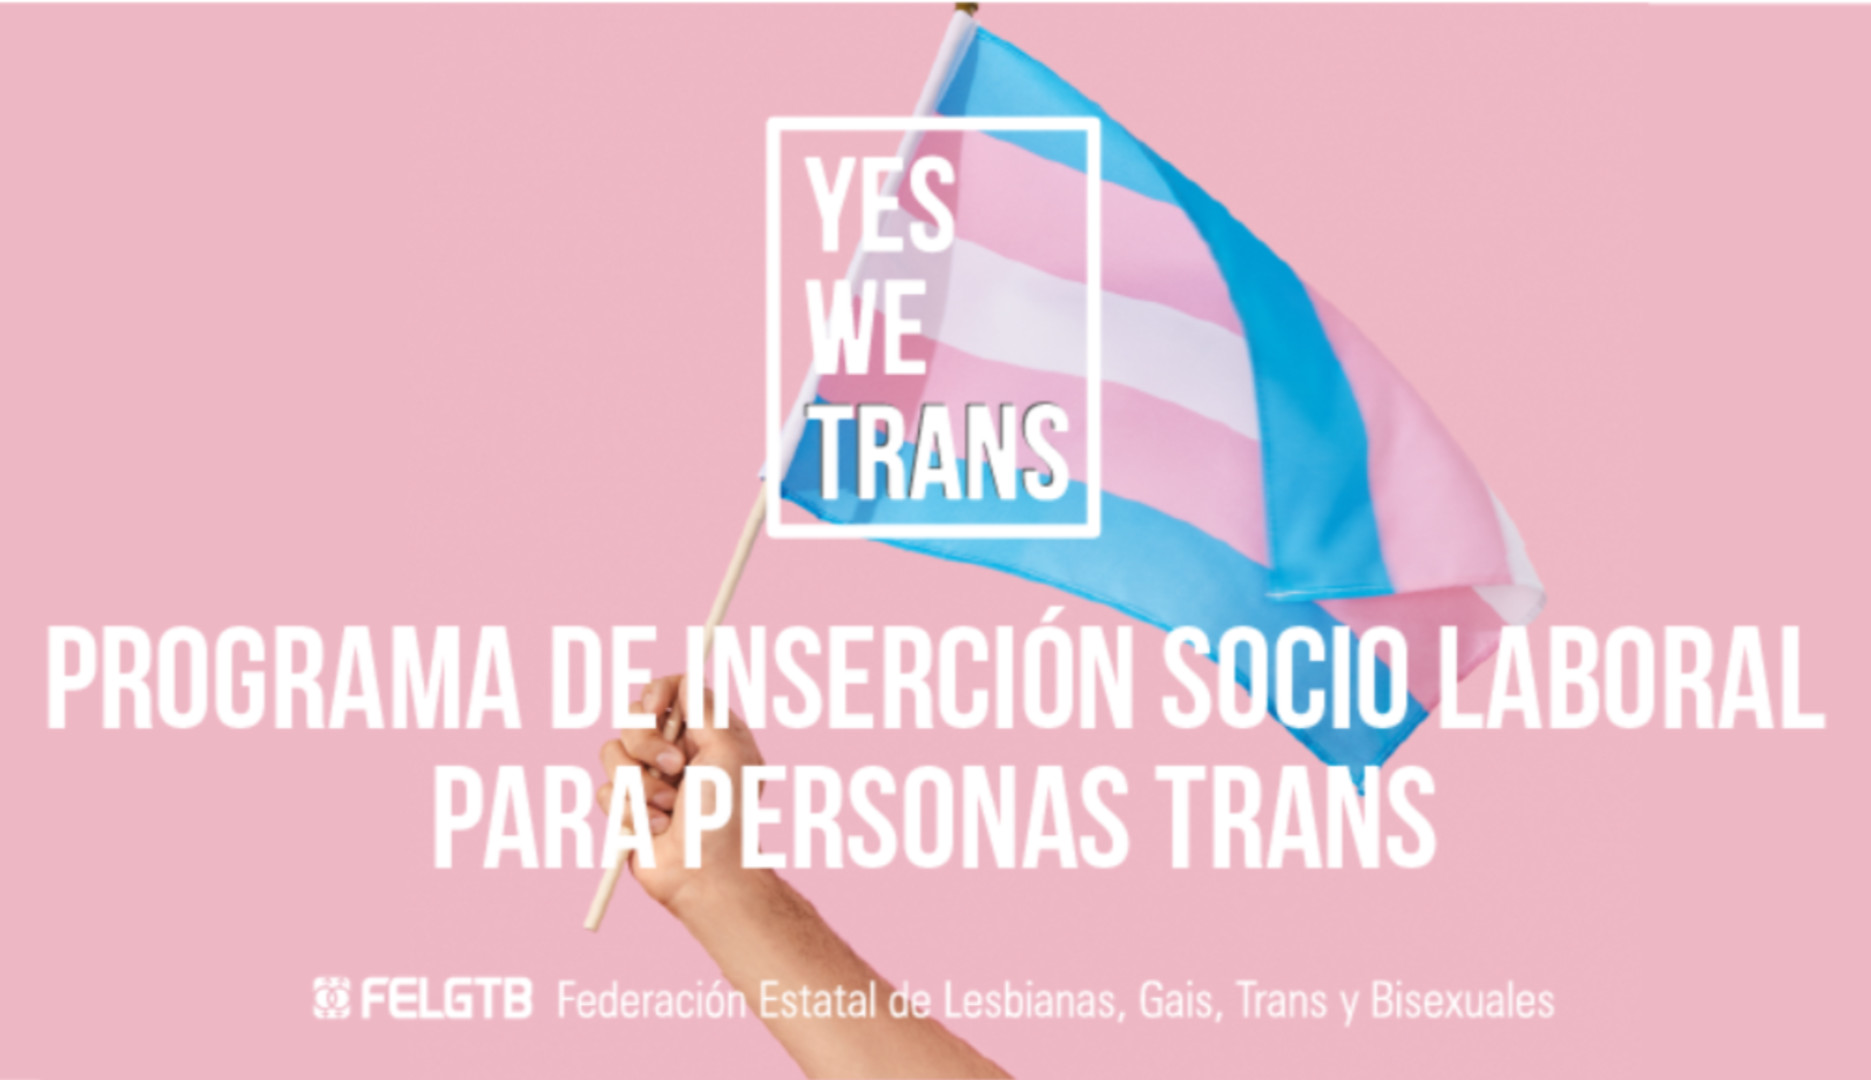 Imagen campaña FELGTB yes we trans